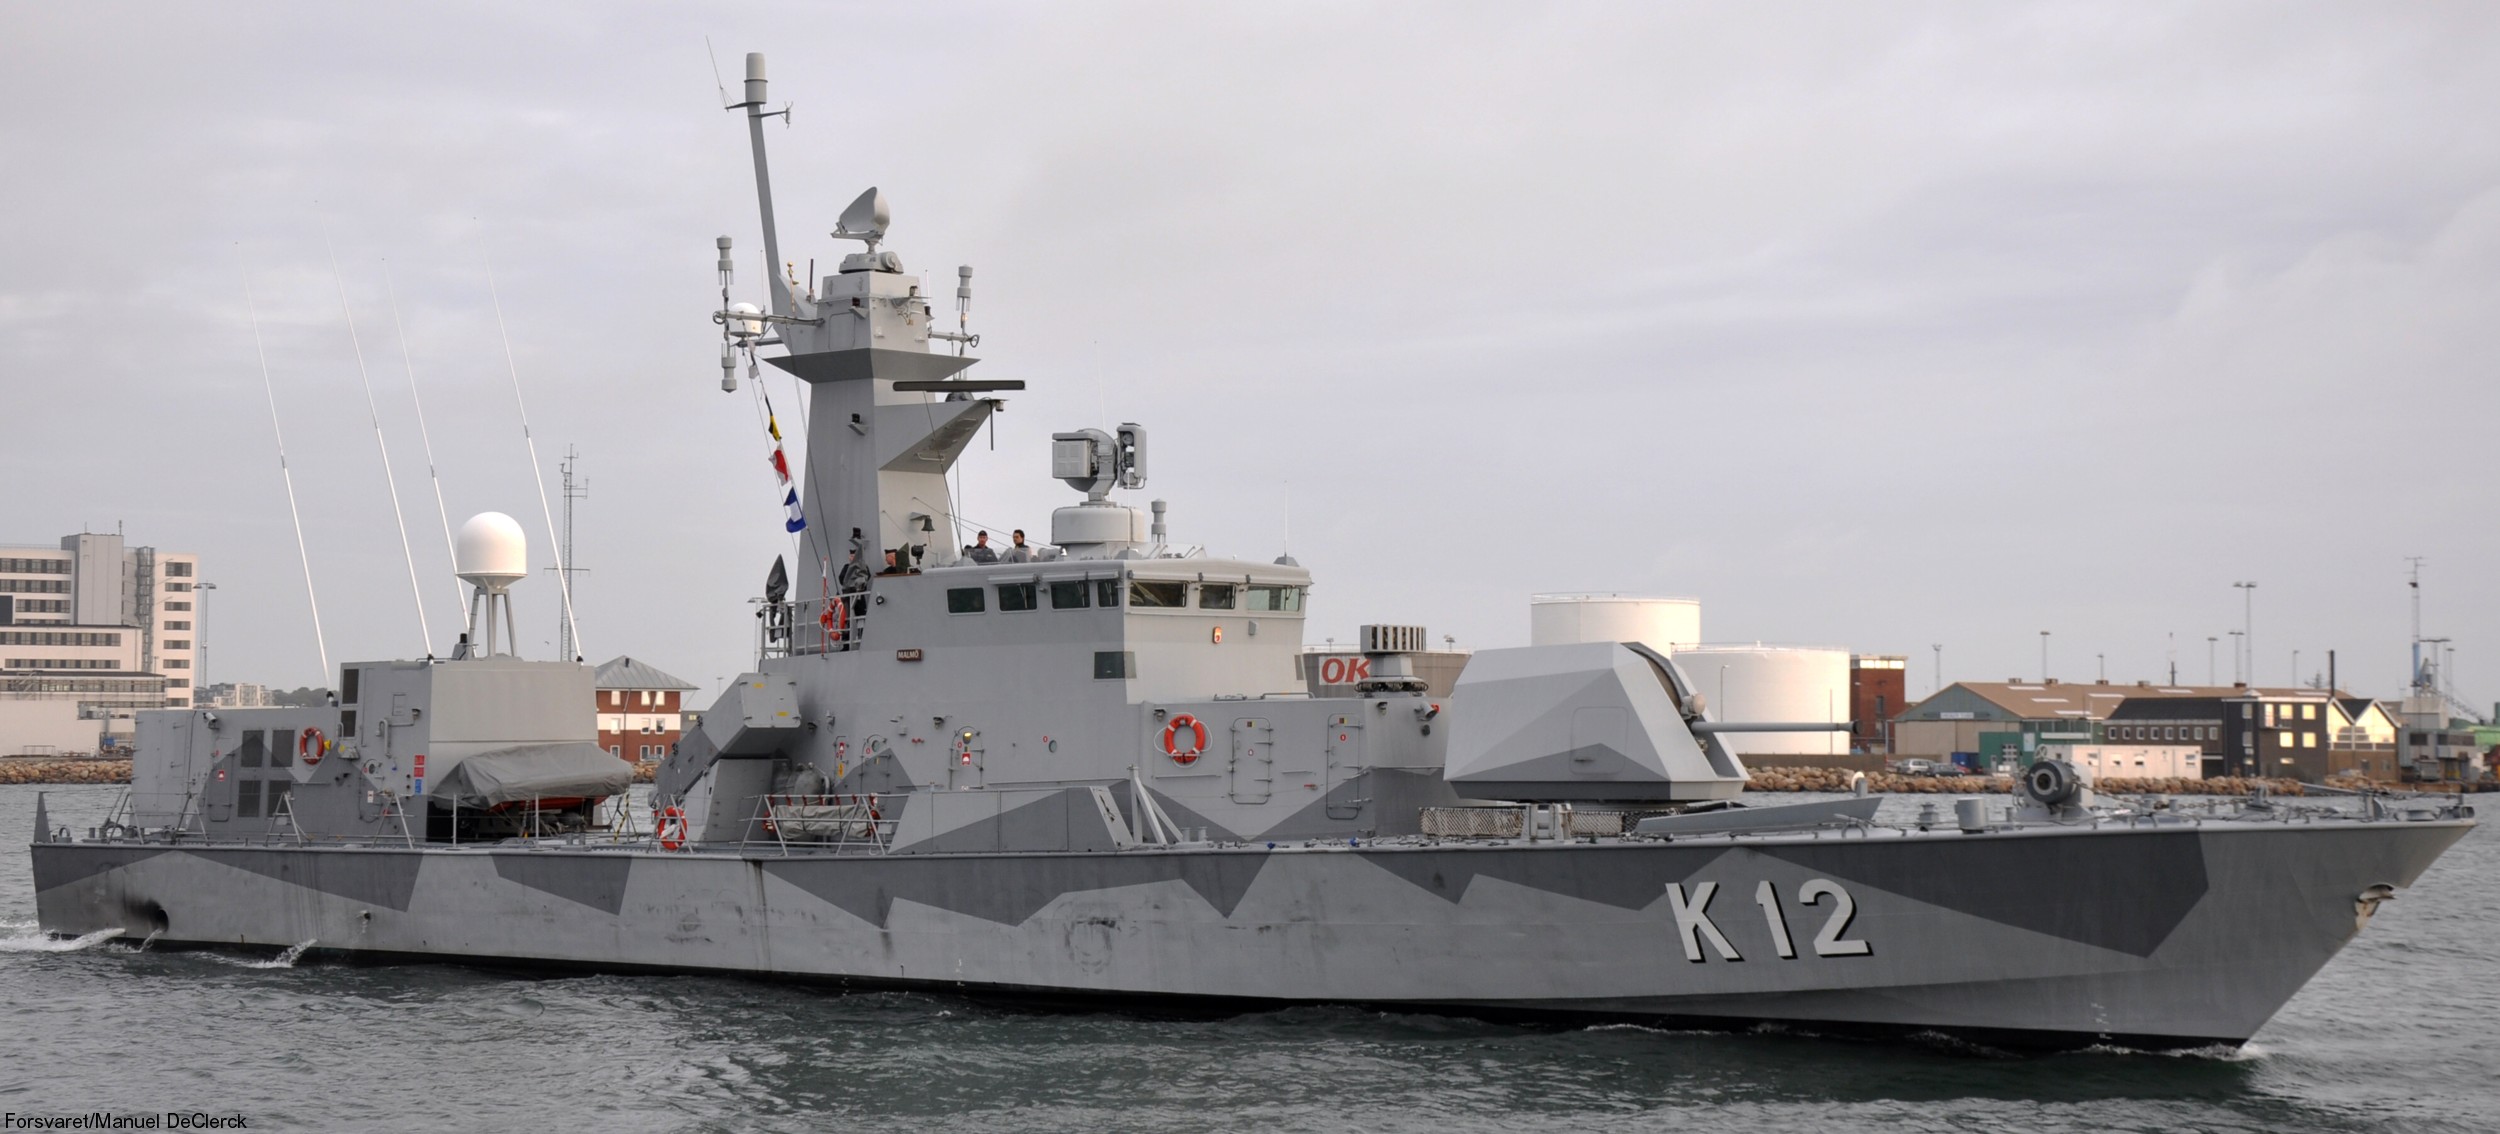 K12 P12 hswms malmö hms stockholm class corvette patrol vessel swedish navy svenska marinen forsvarsmakten 10